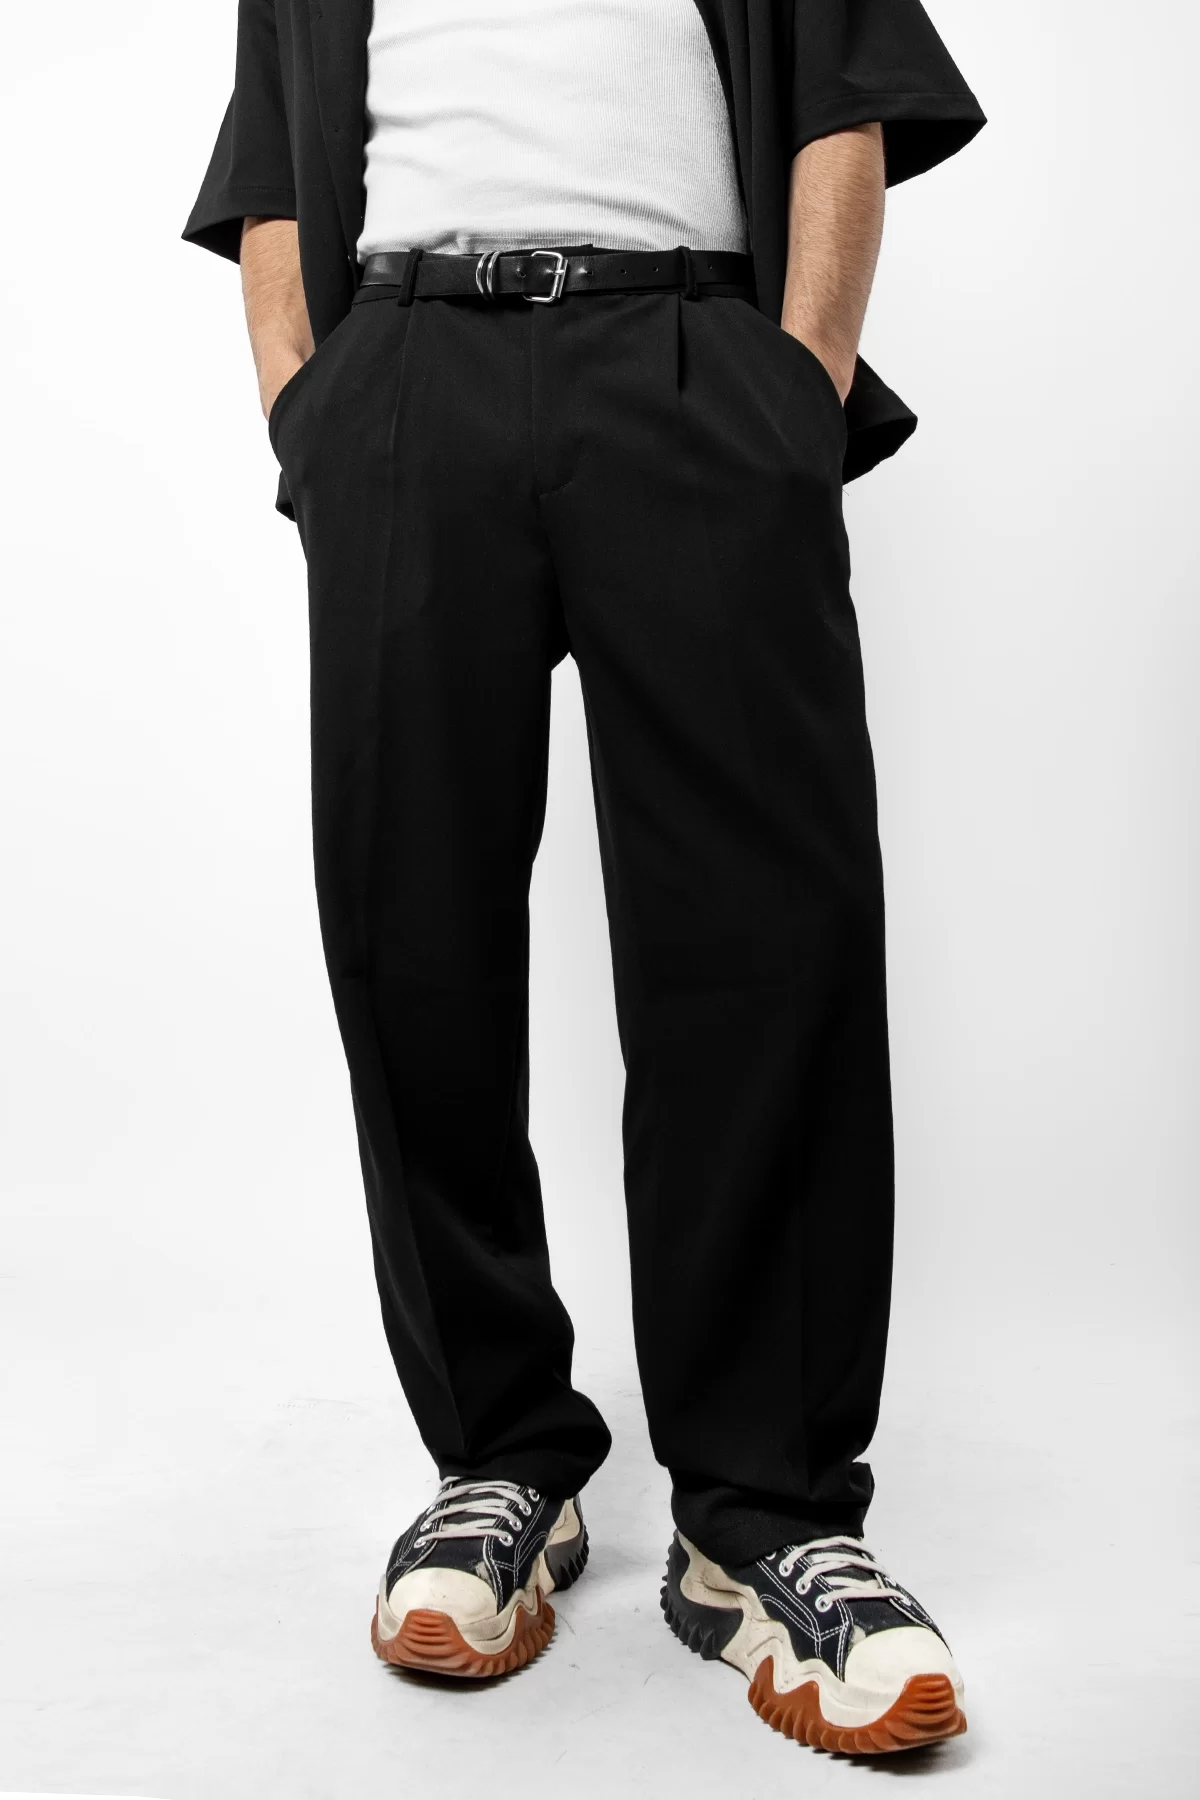 Basic Premium Kumaş Loose Fit Unisex Siyah Pantolon